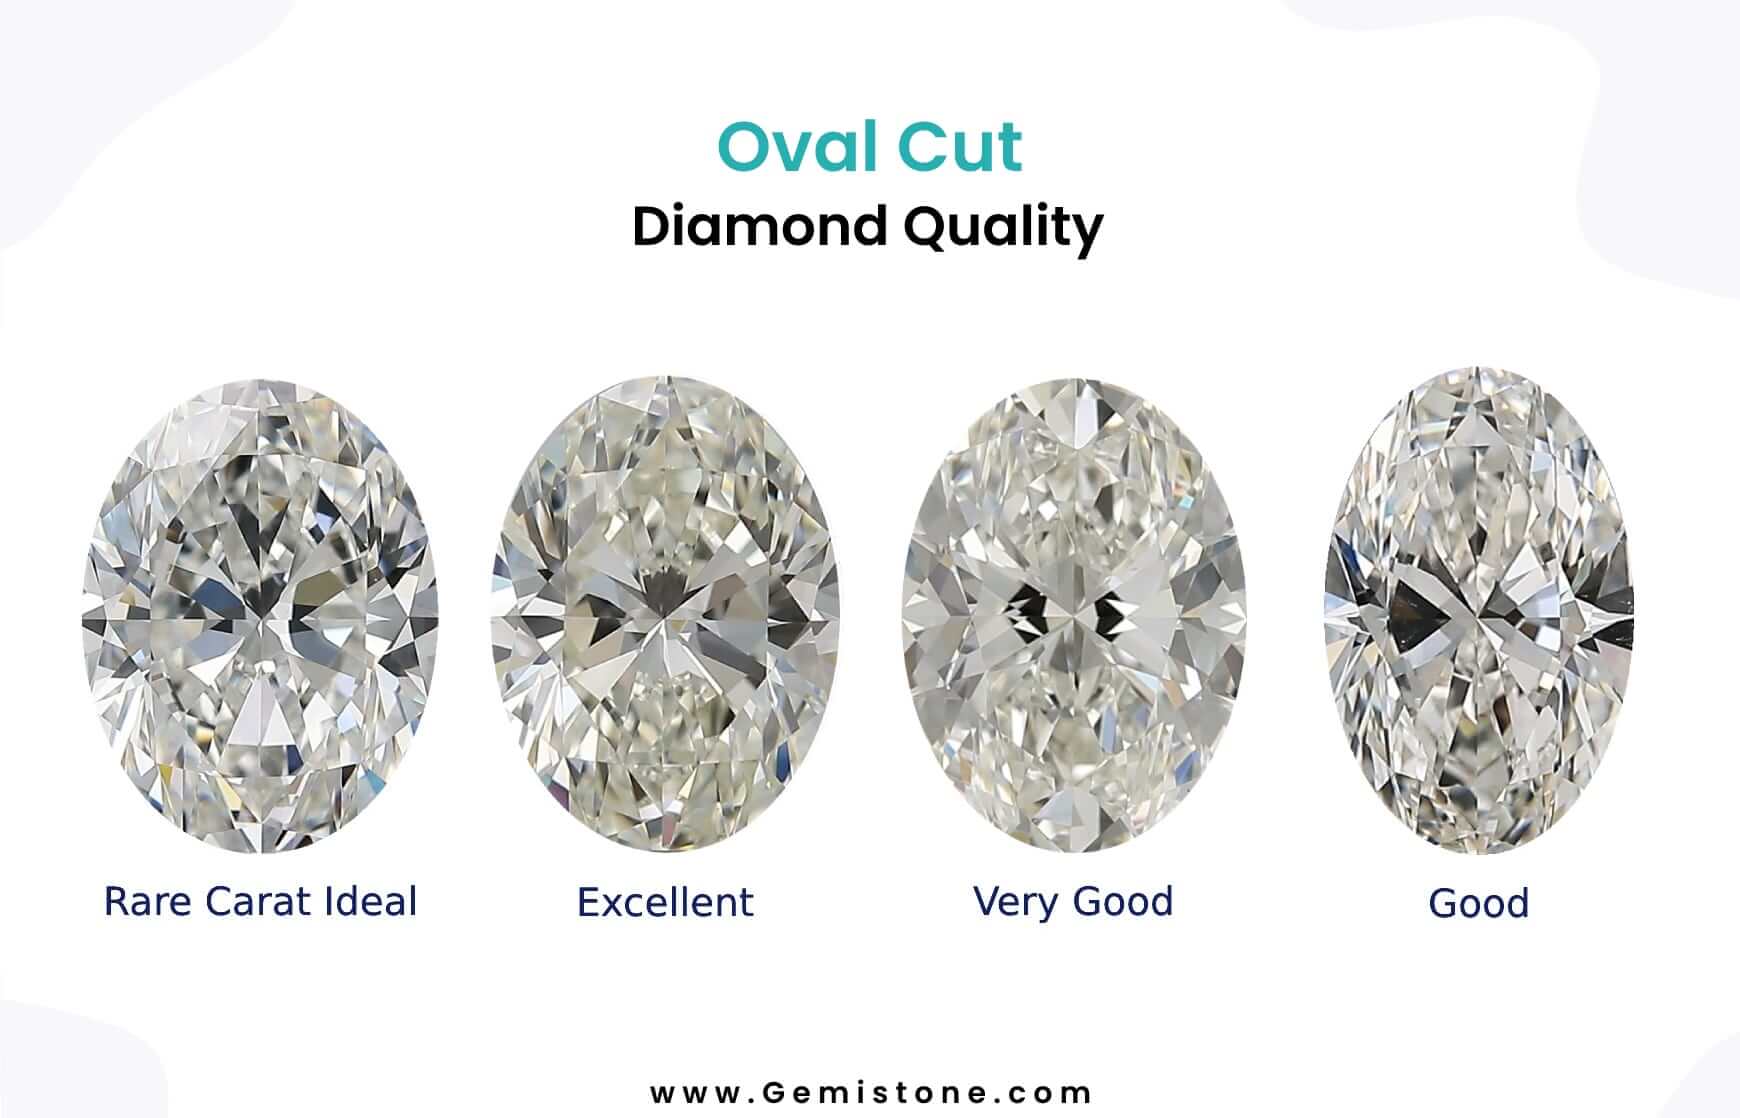 Oval Cut Diamond Quality, Oval Cut Diamond